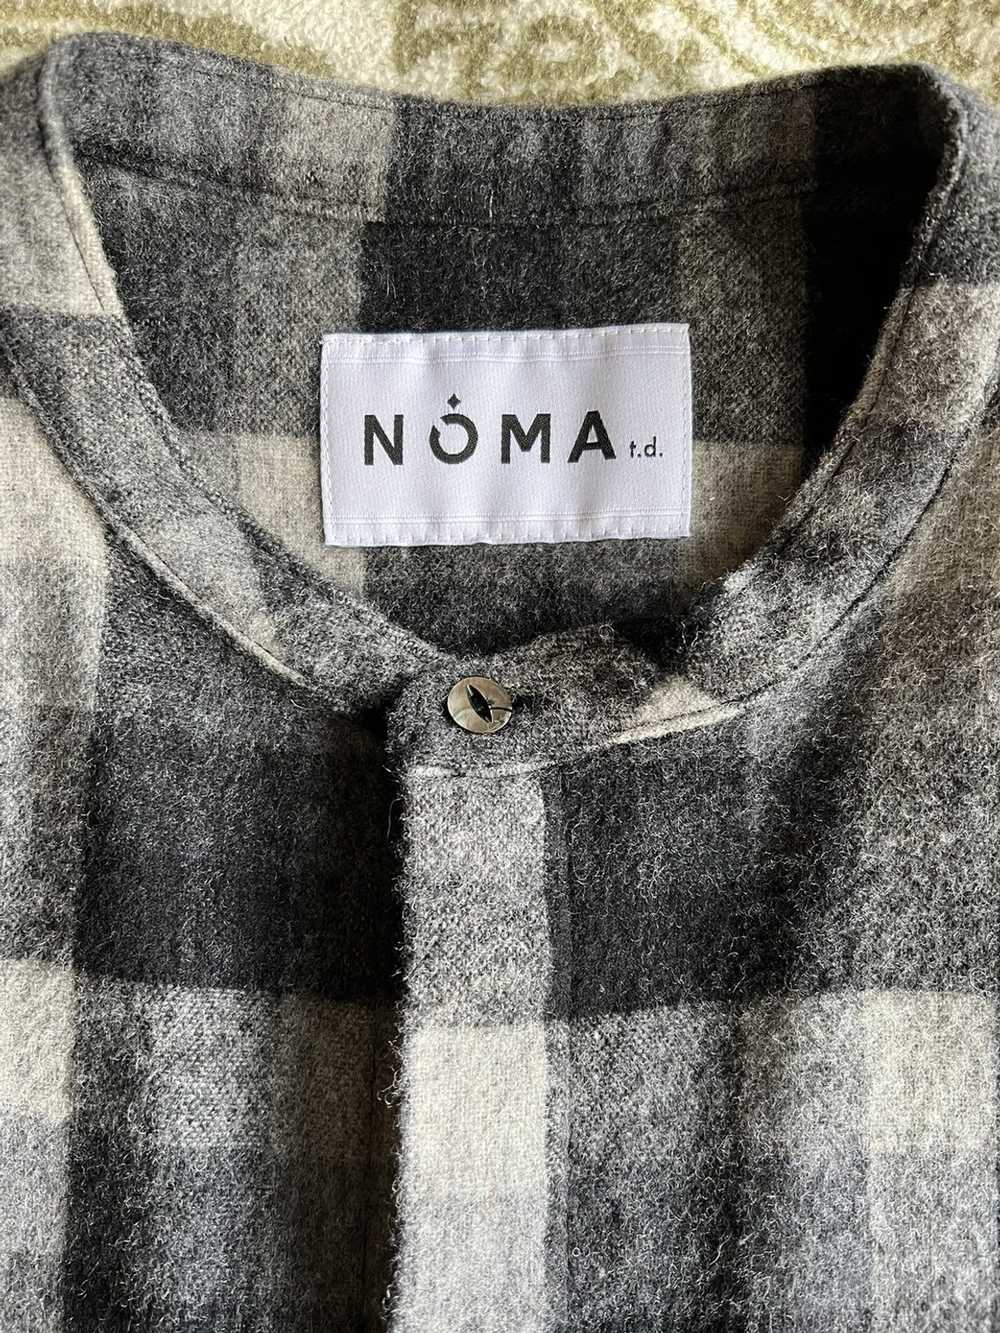 NOMA t.d Noma t. d. Wool Long Shirt w/ Mandarin C… - image 2